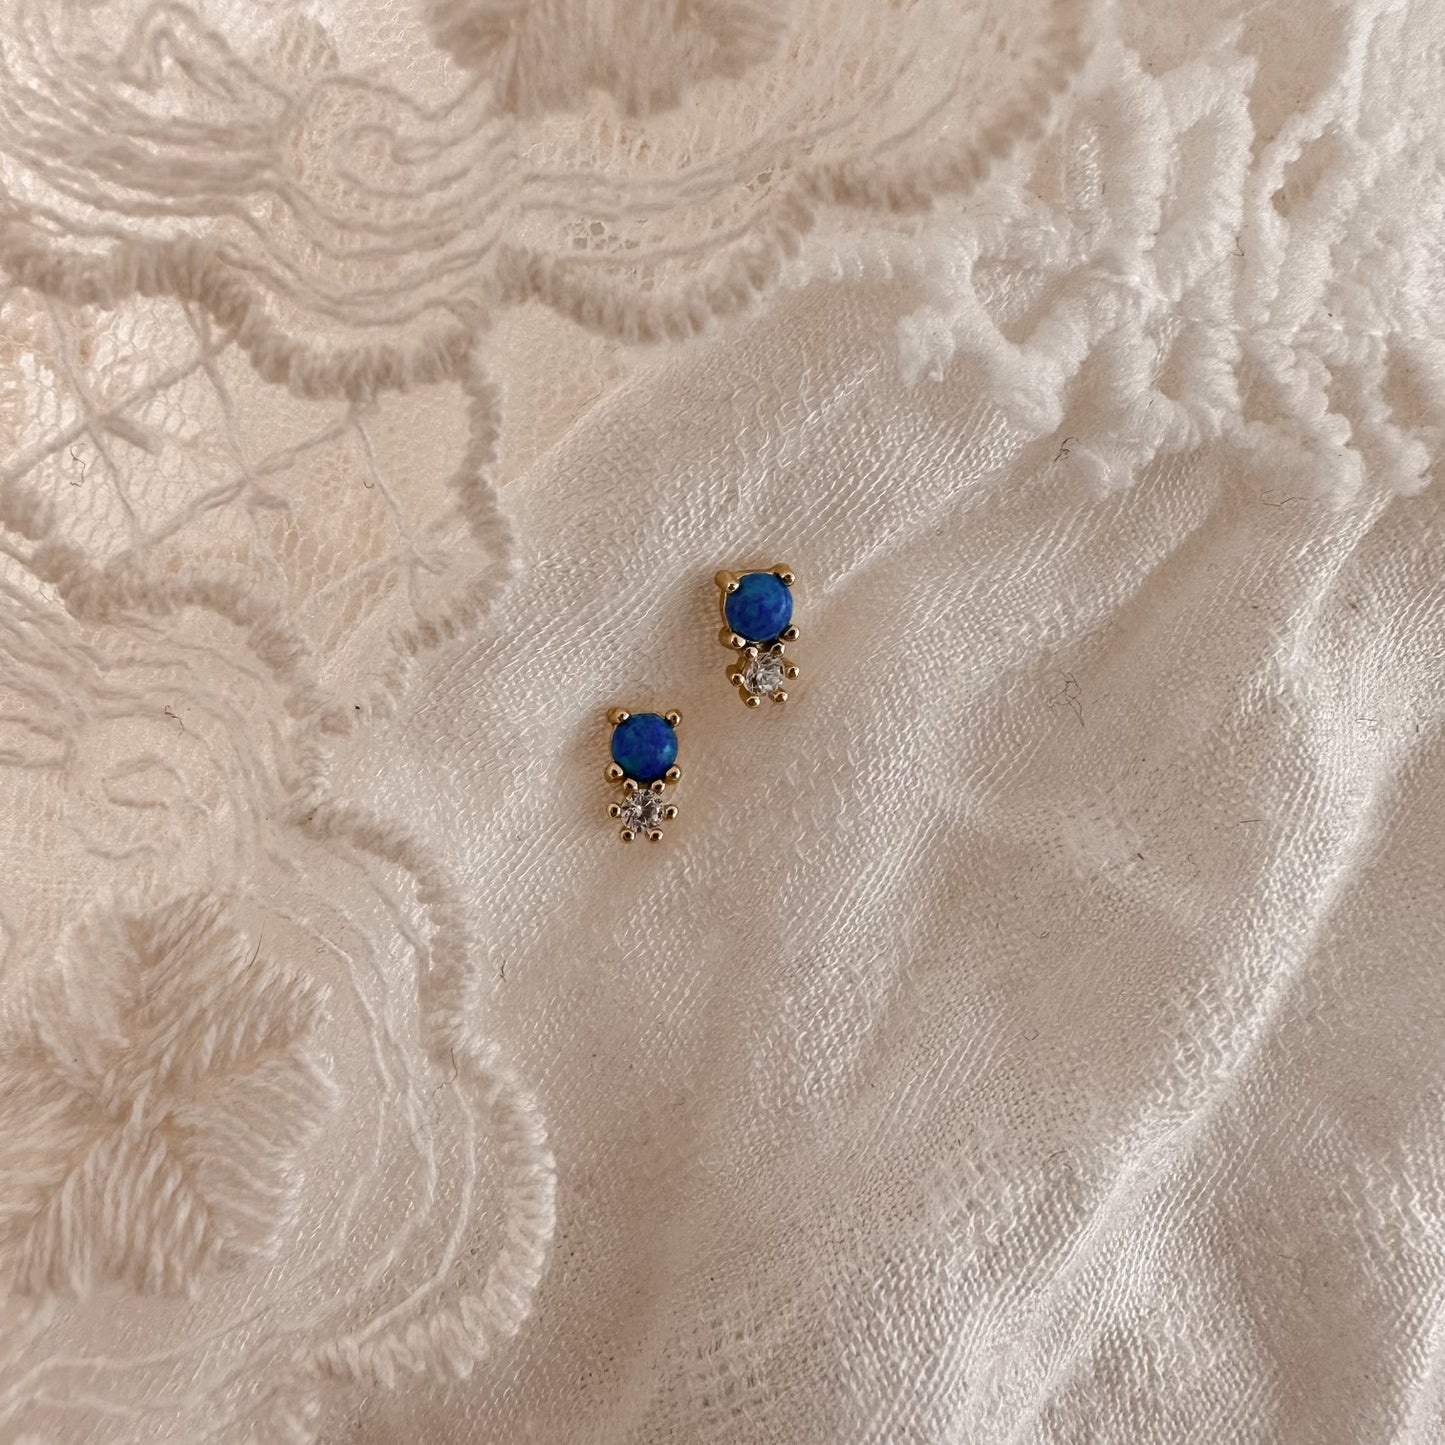 Blue opal + crystal studs - gold